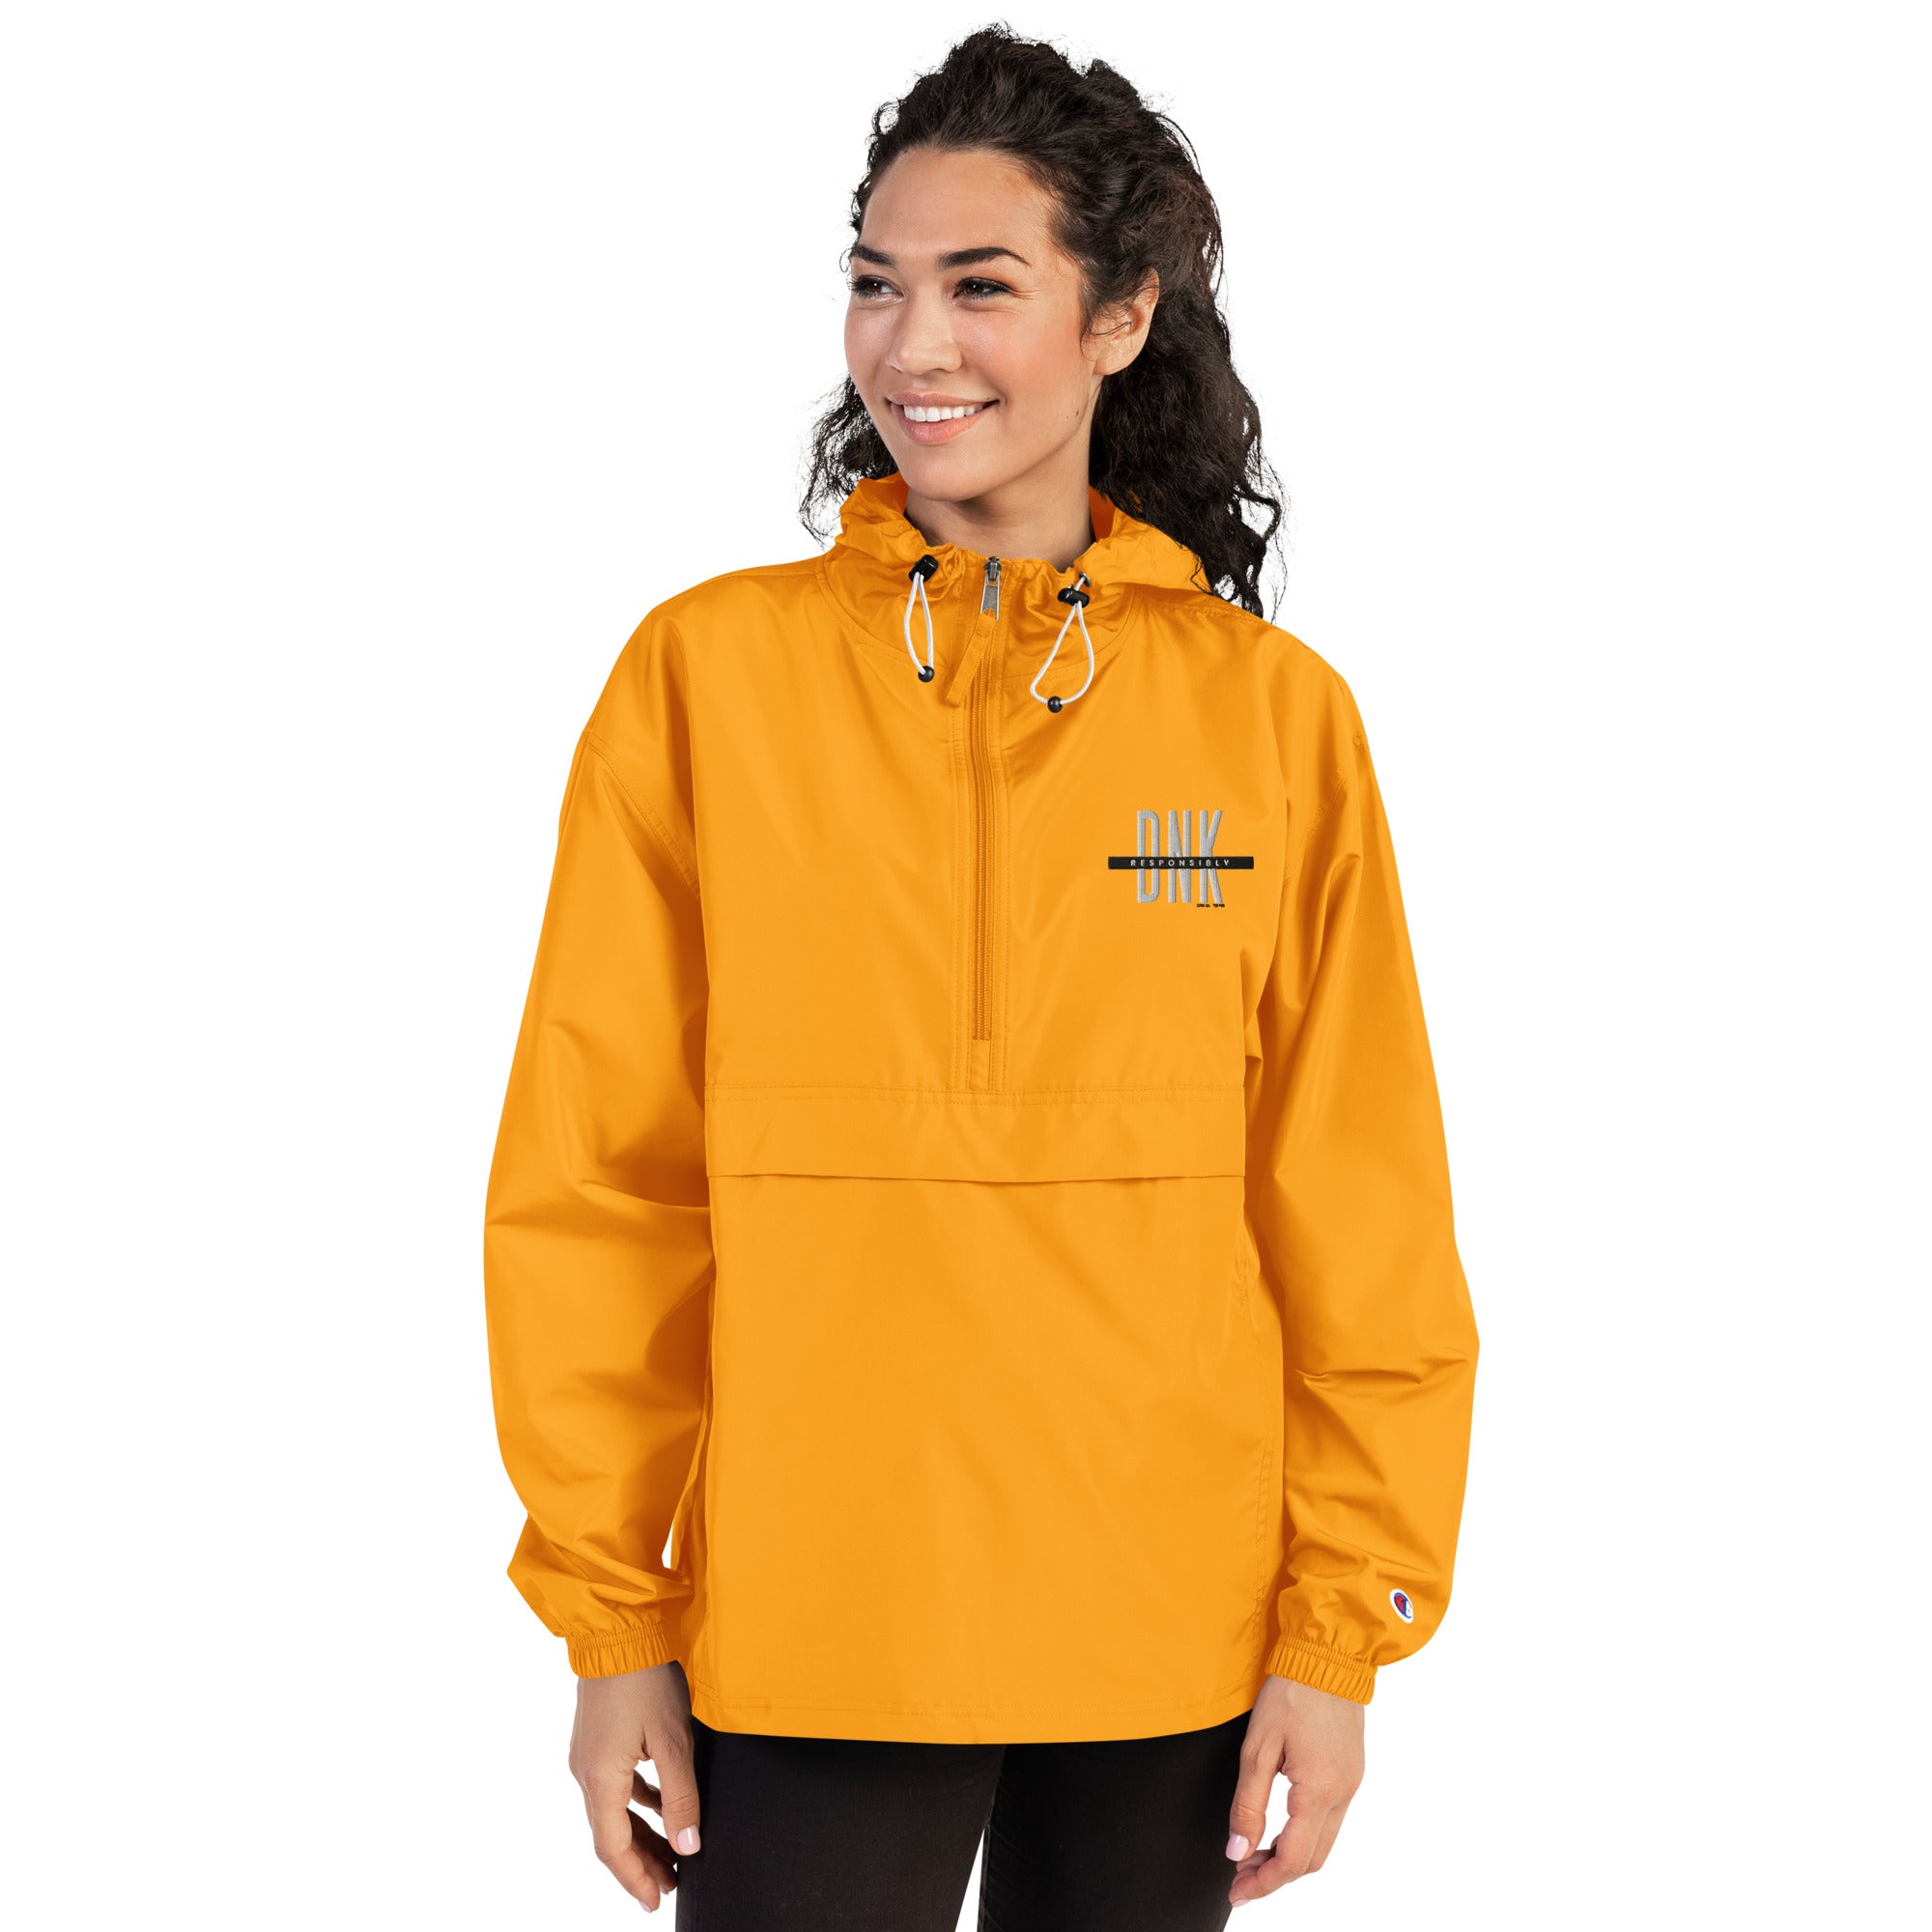 champion dink responsibly pickleball jacket bright orange